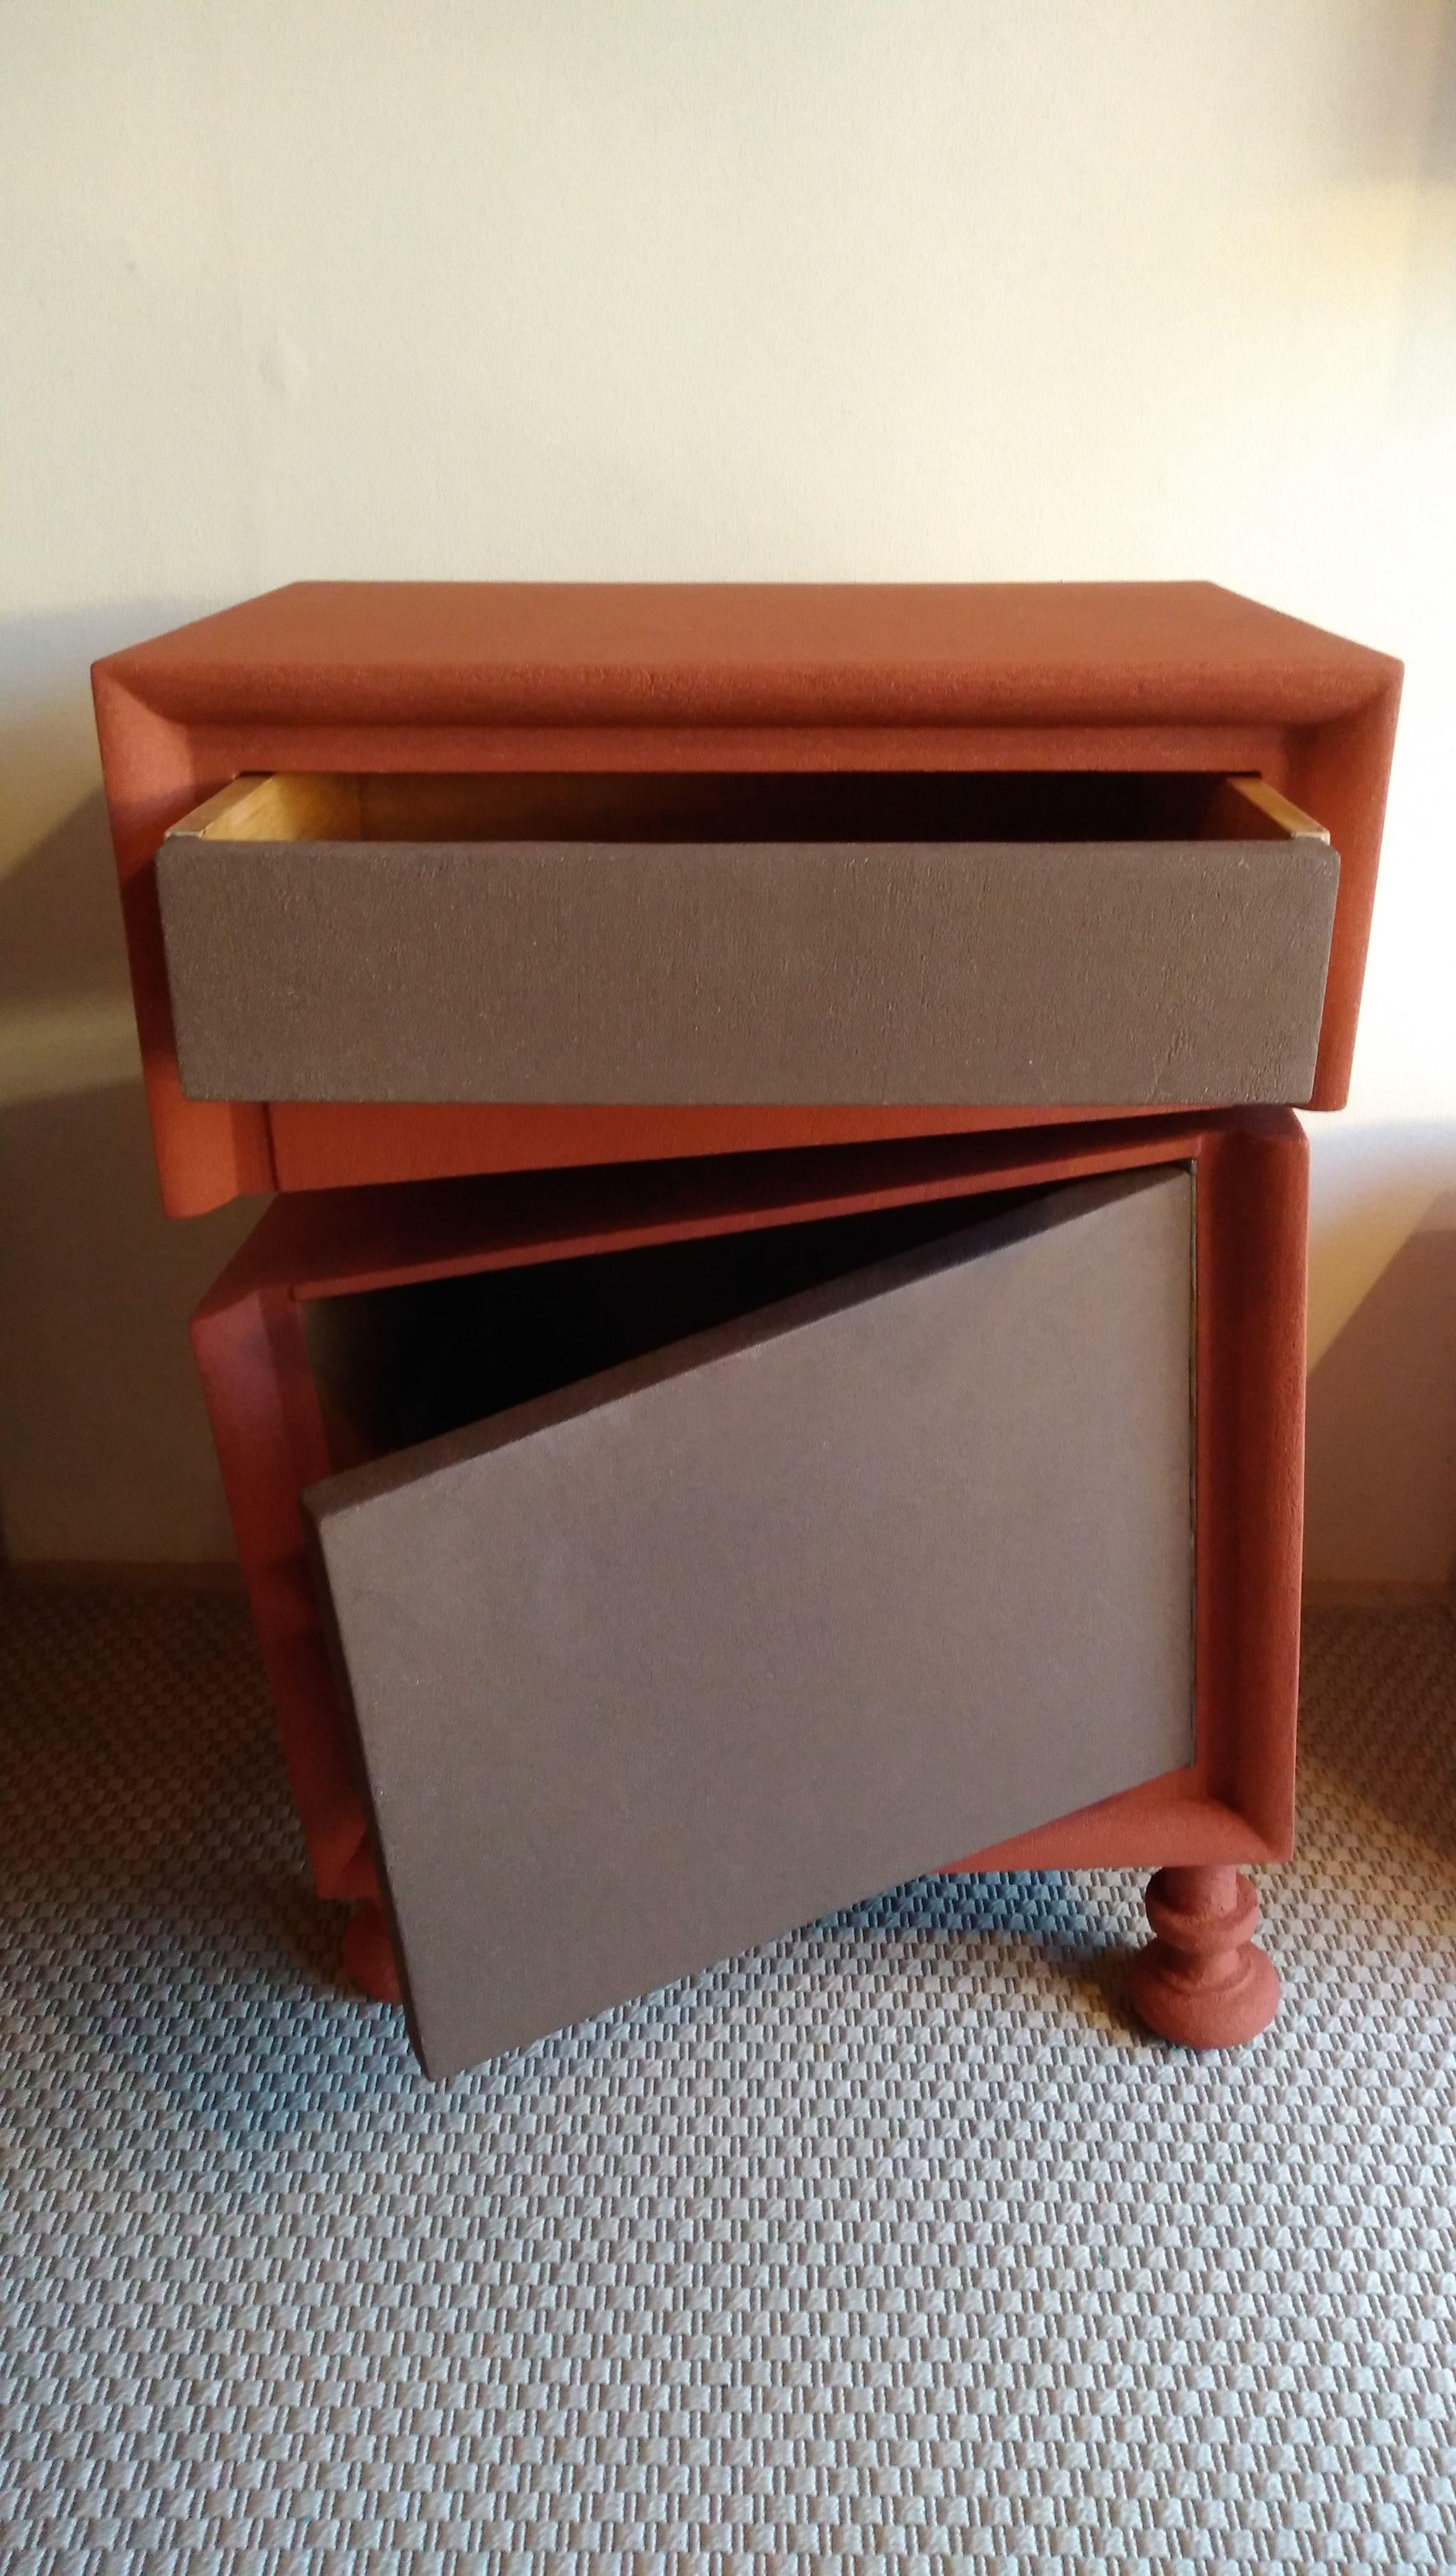 21st Cent. Cabinet-Sculpture Italian Design Contemporary Copper Color Wood-Resin For Sale 1